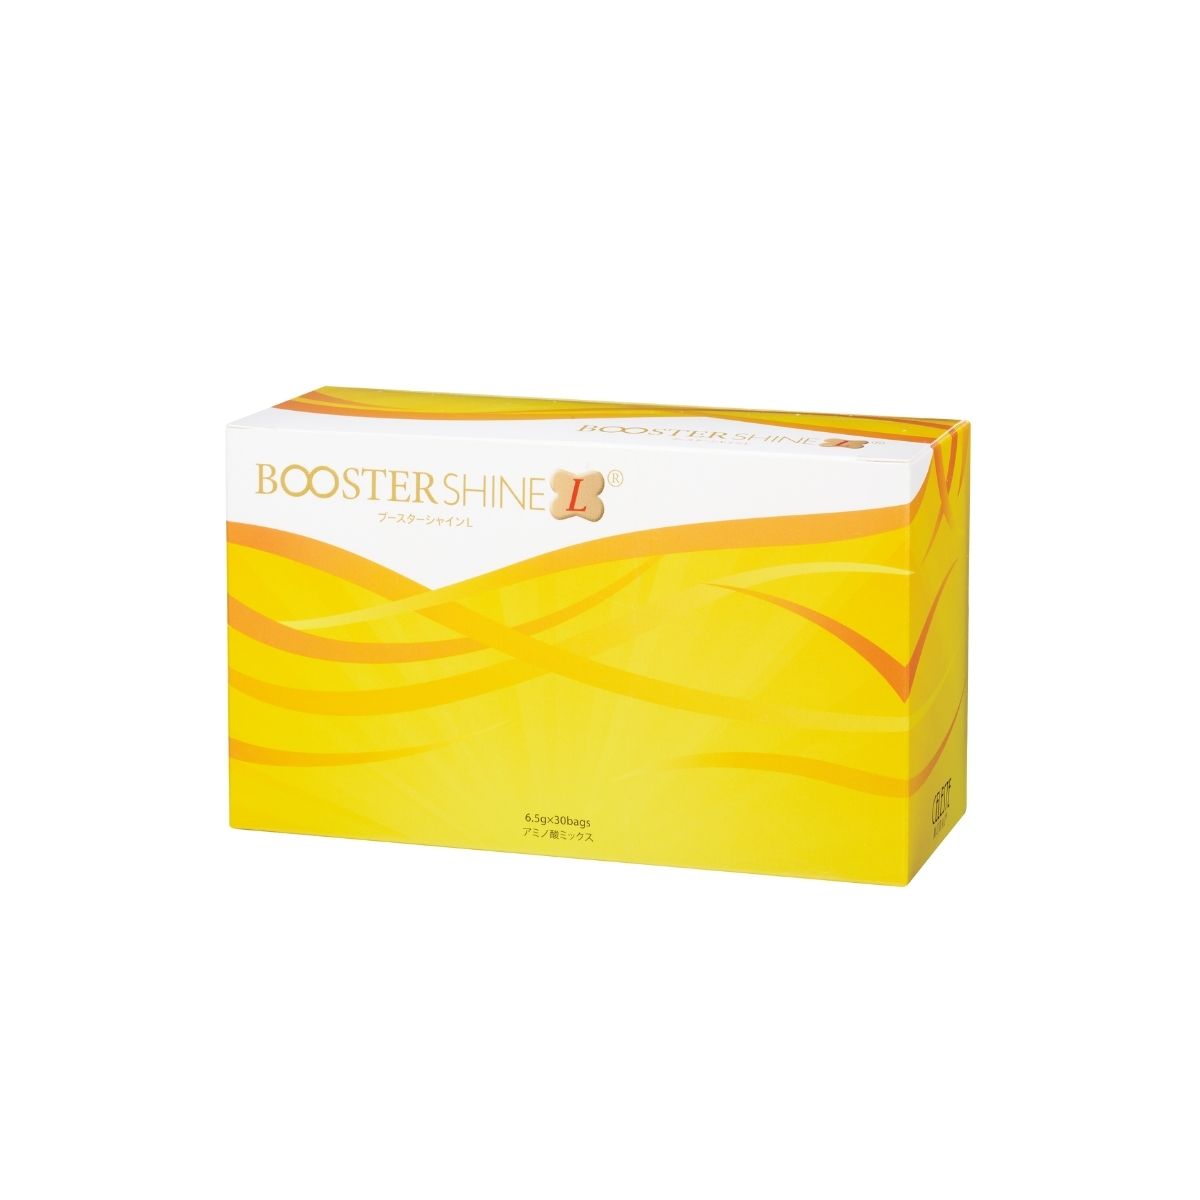 陽光美人- SOCIE 陽光胺基酸 Booster Shine L 1盒 6.5g x30 袋入